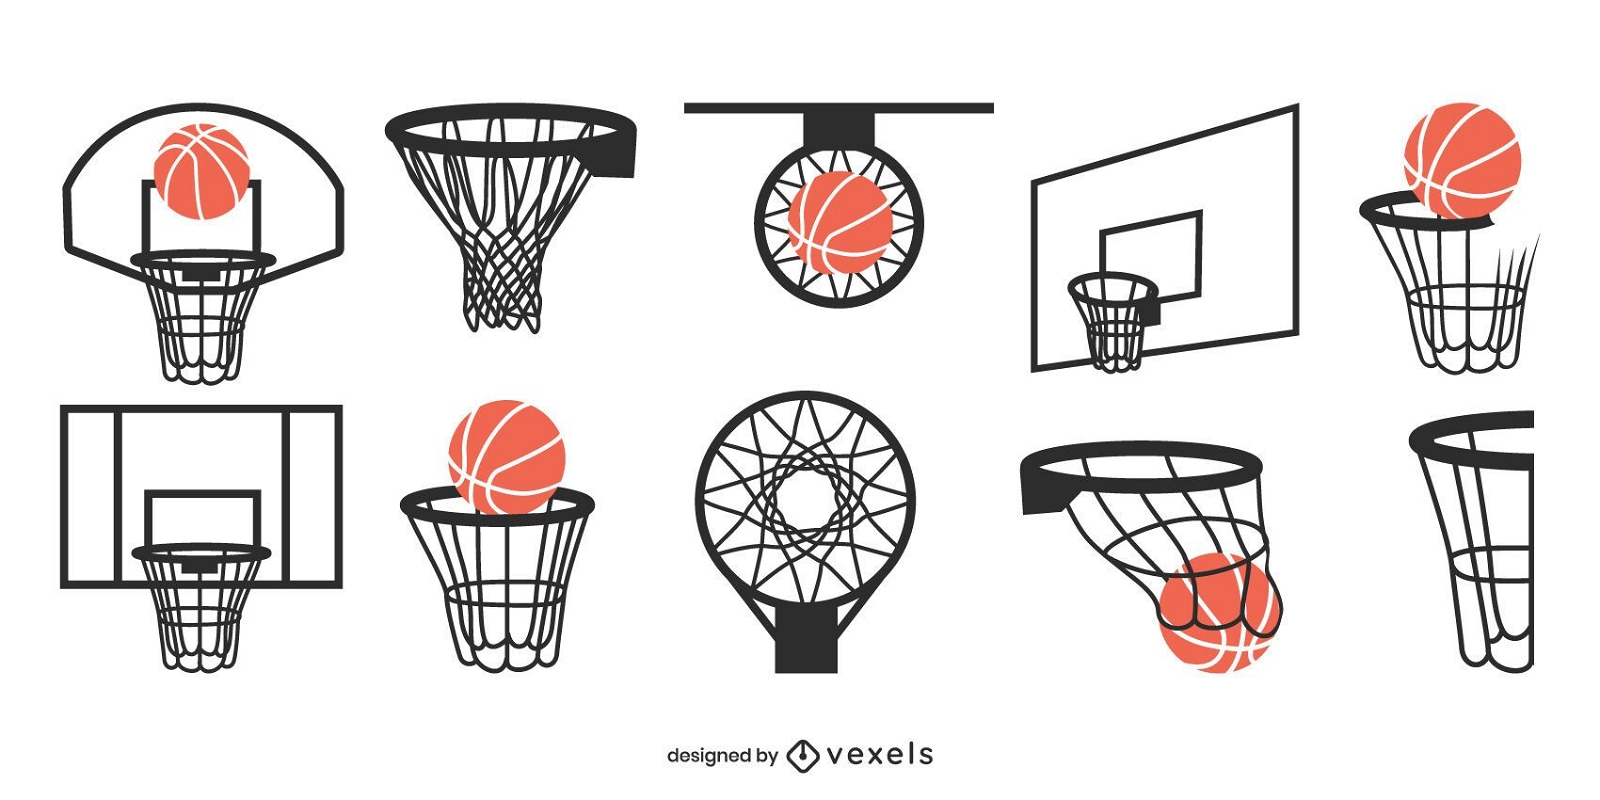 Backboard basketball design set